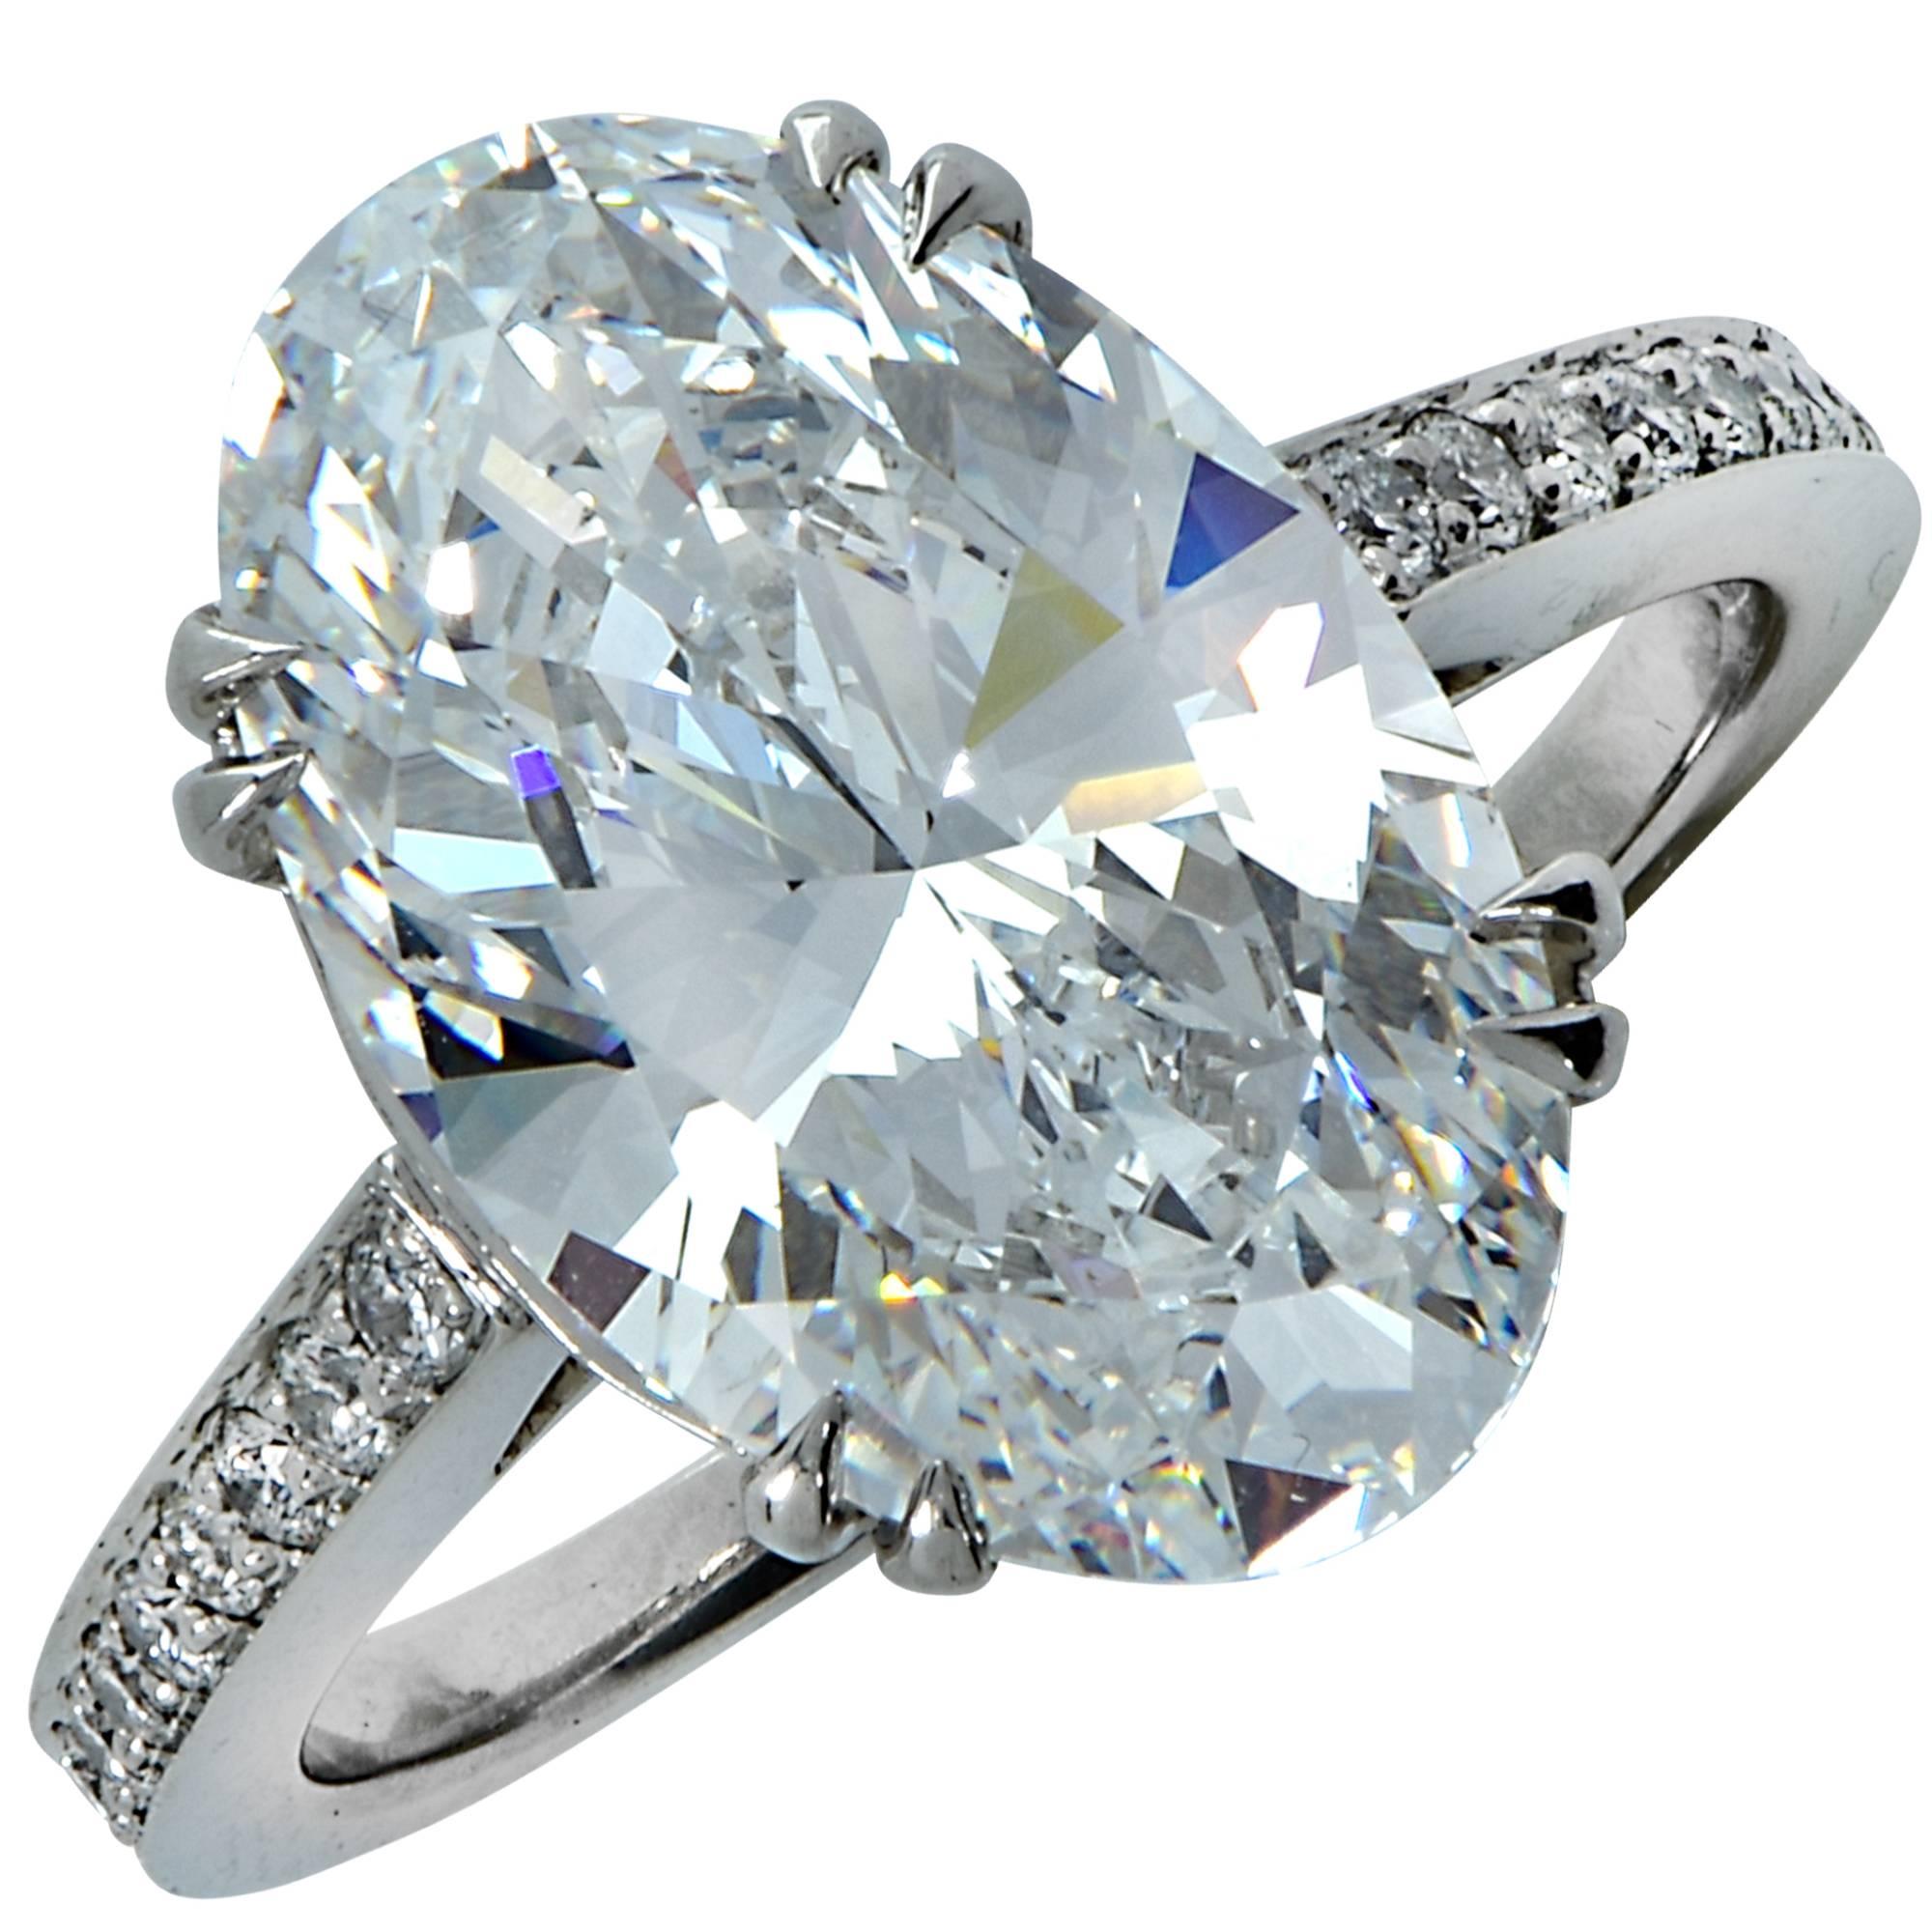 Vivid Diamonds GIA Graded 6.15 Carat Oval Cut Diamond Engagement Ring